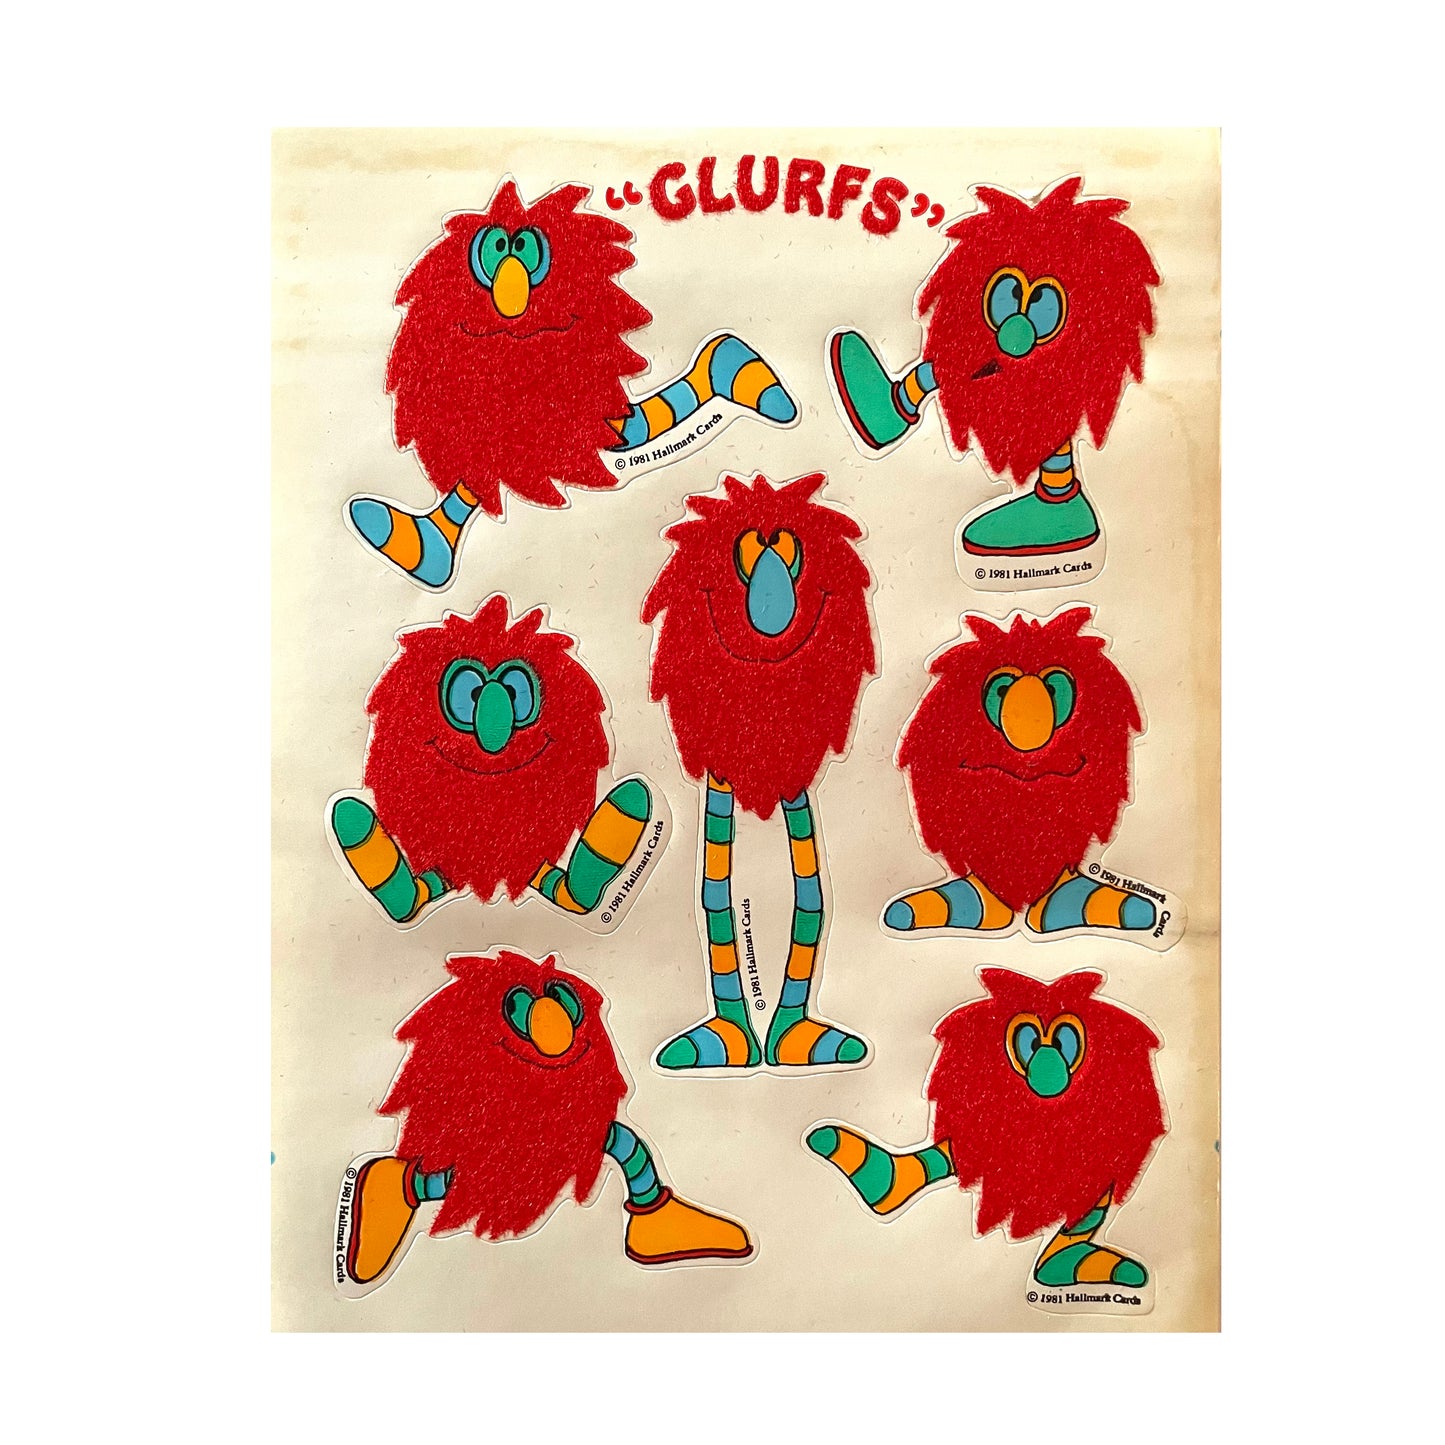 HALLMARK: Fuzzy Red Glurfs Stickers